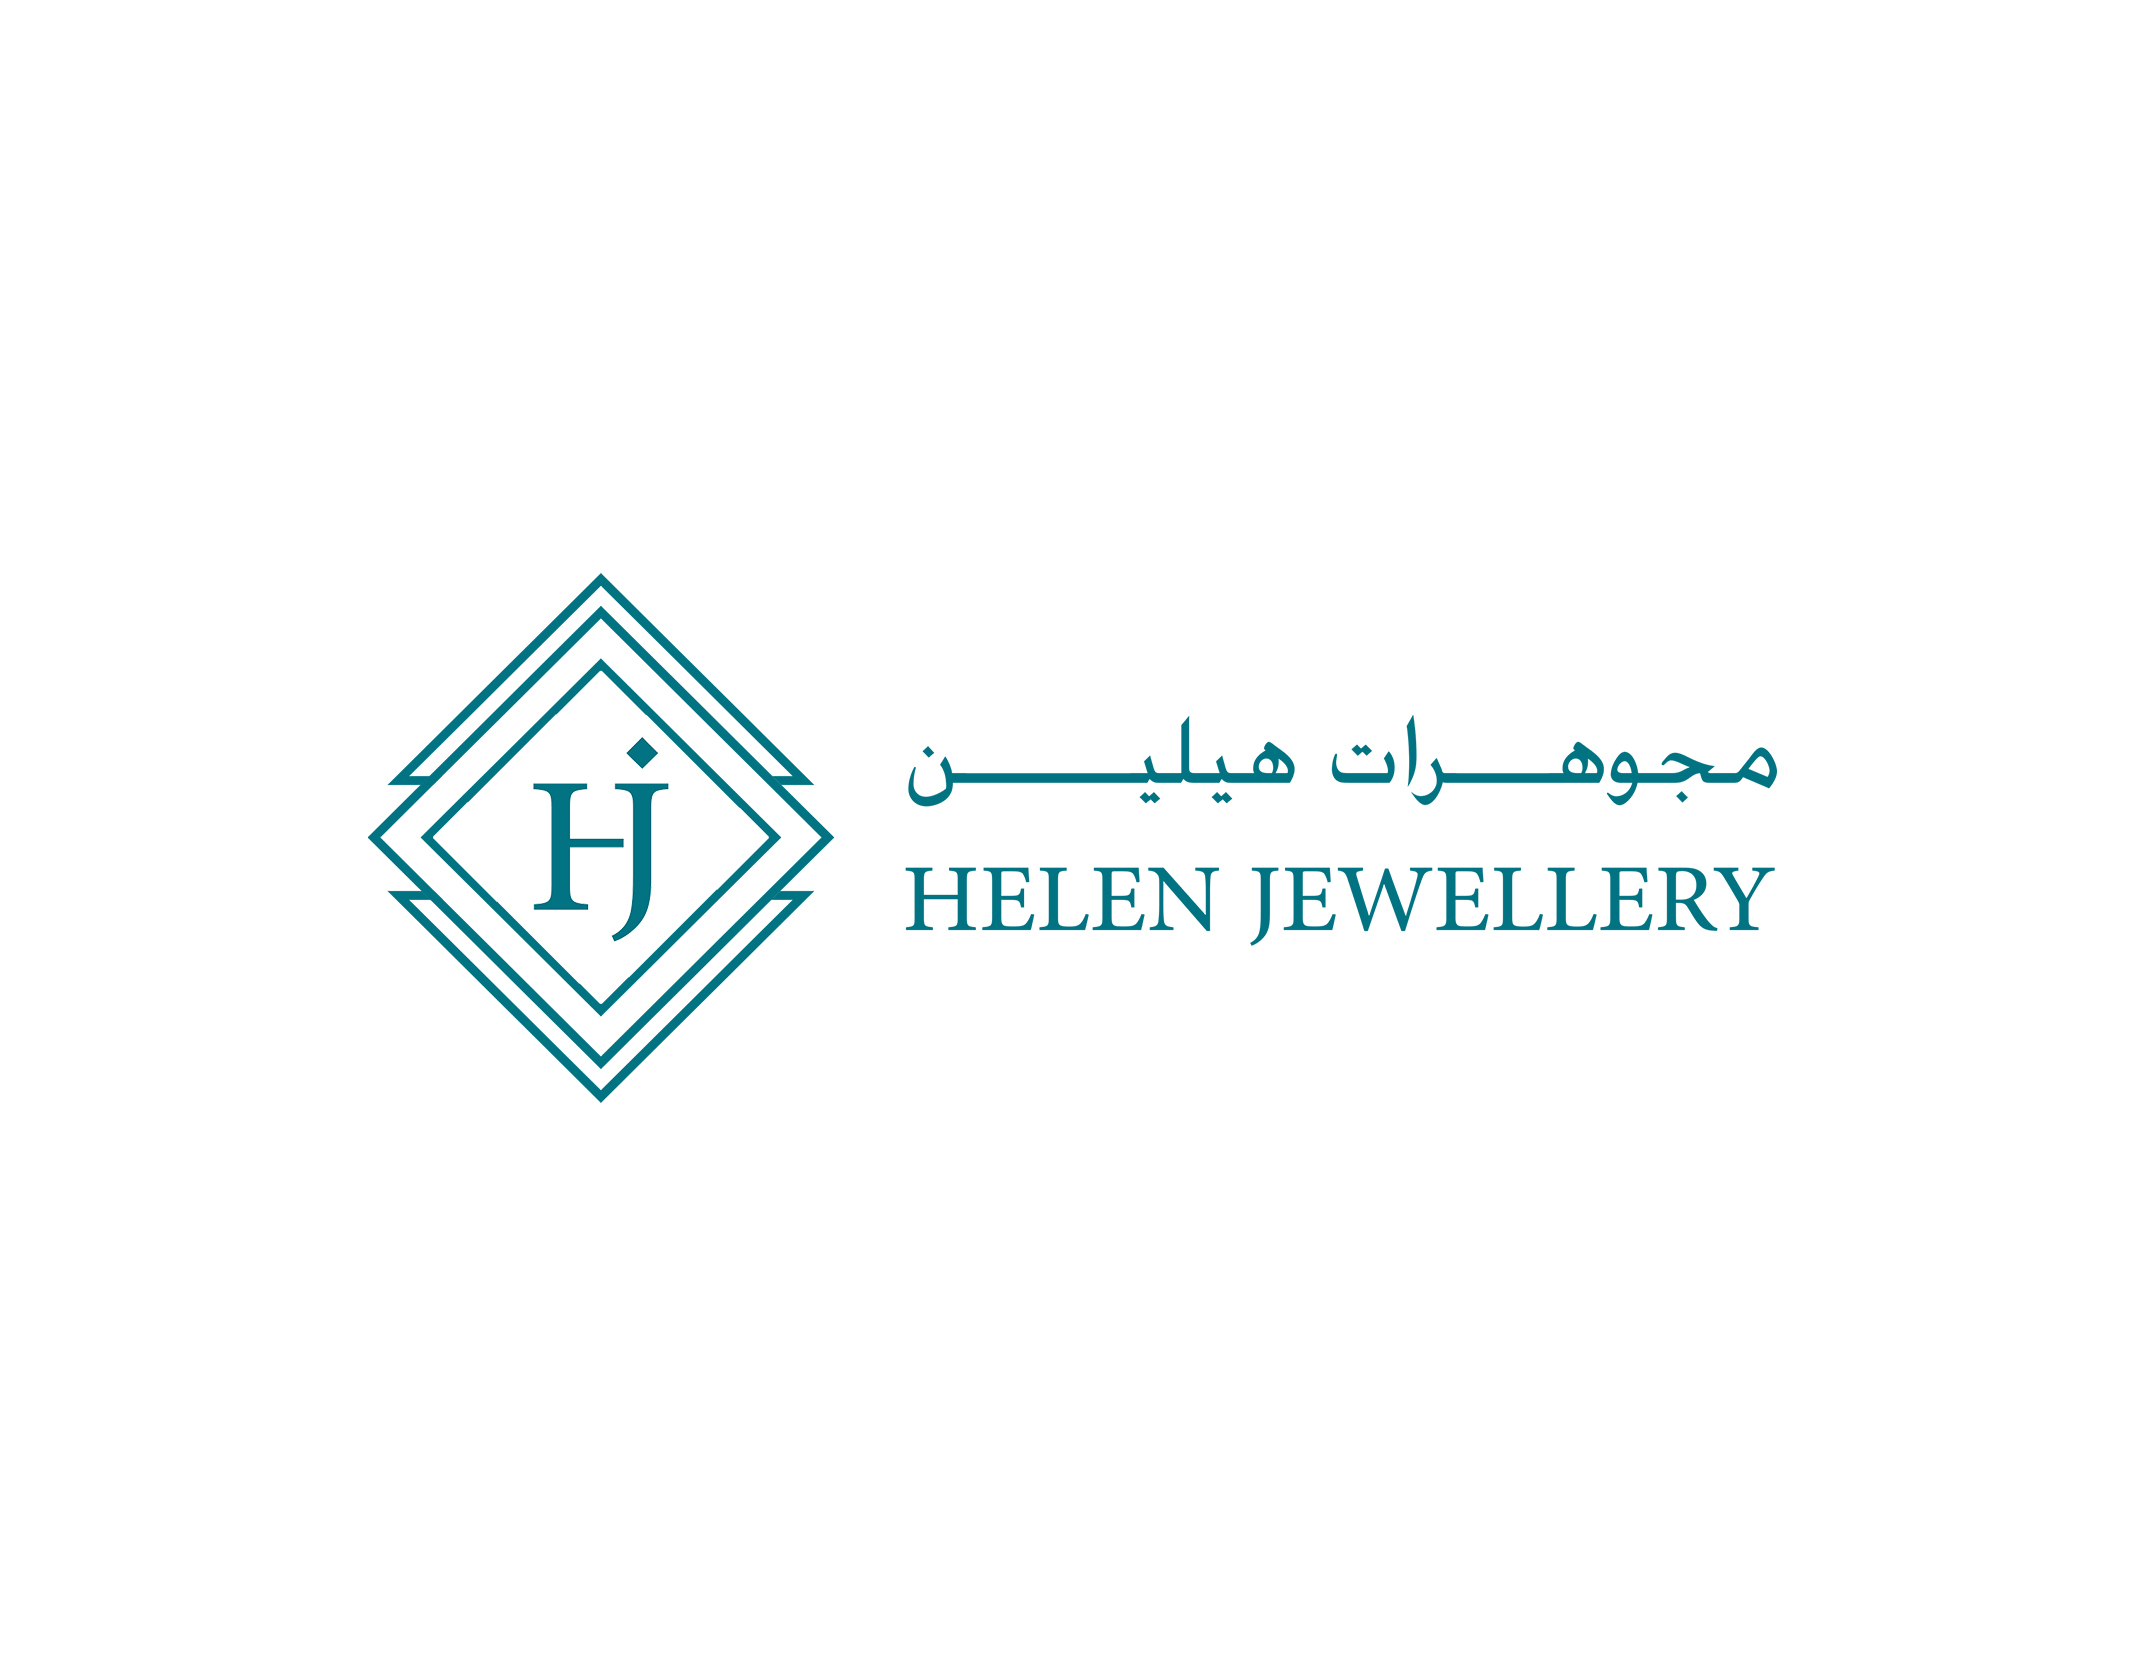 Helen Jewellery